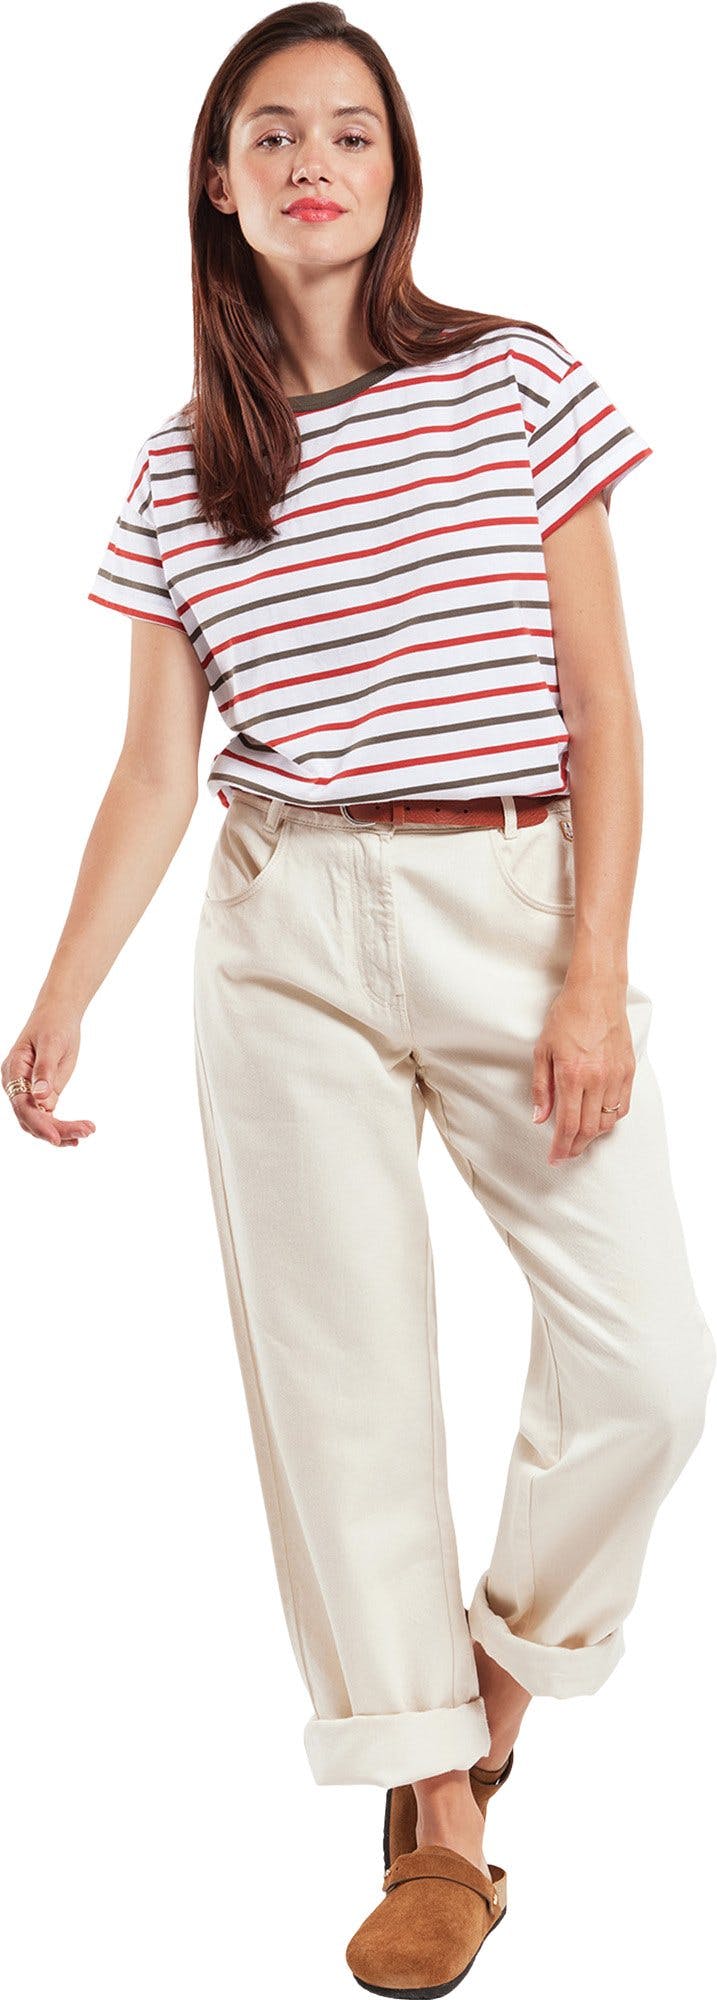 Product image for Short Sleeve Breton T-Shirt - Women's